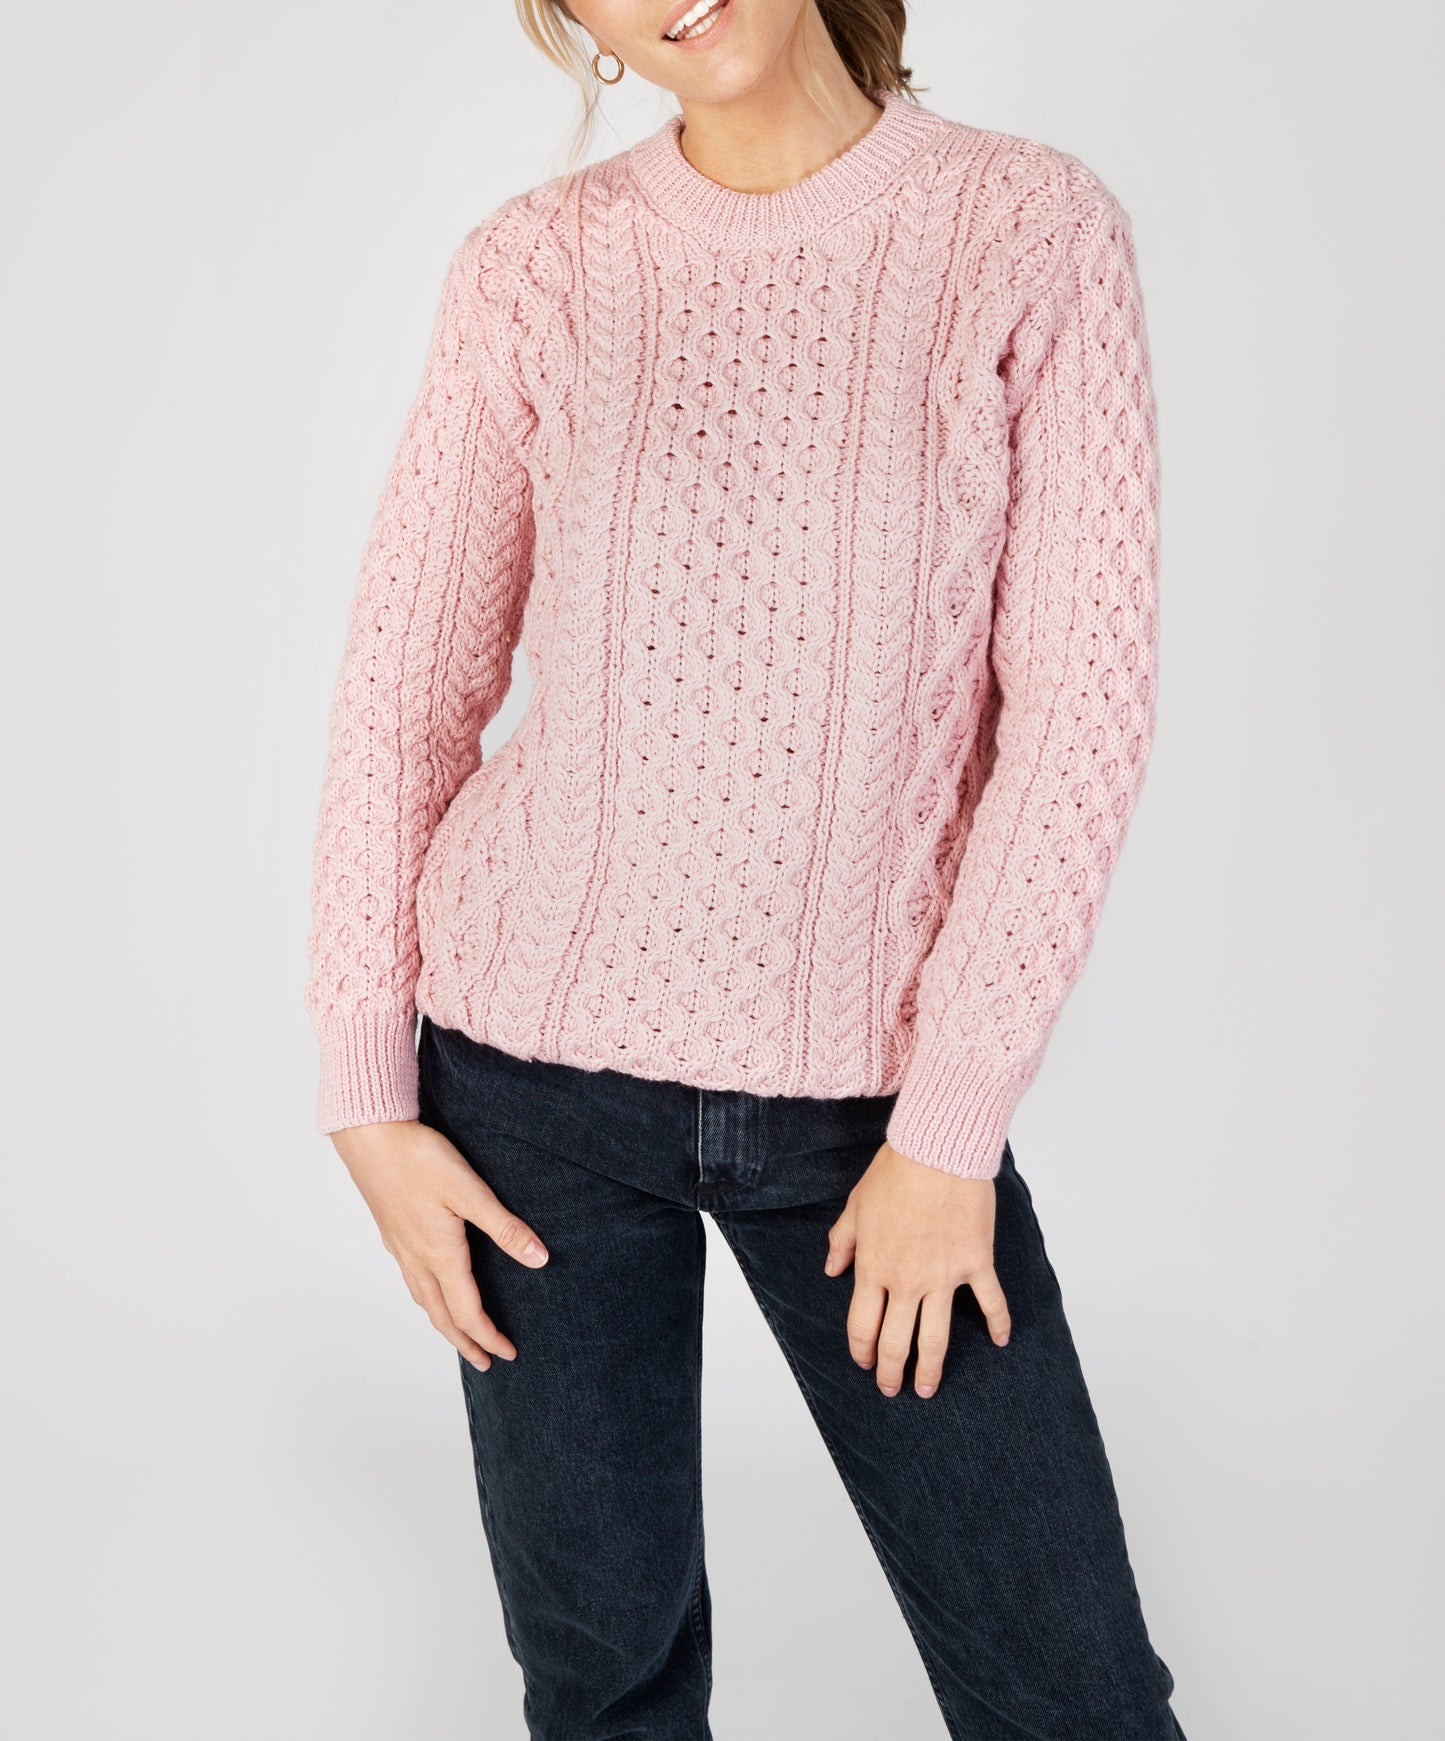  IrelandsEye Knitwear Blasket Honeycomb Stitch Womens Aran Sweater Pale Pink